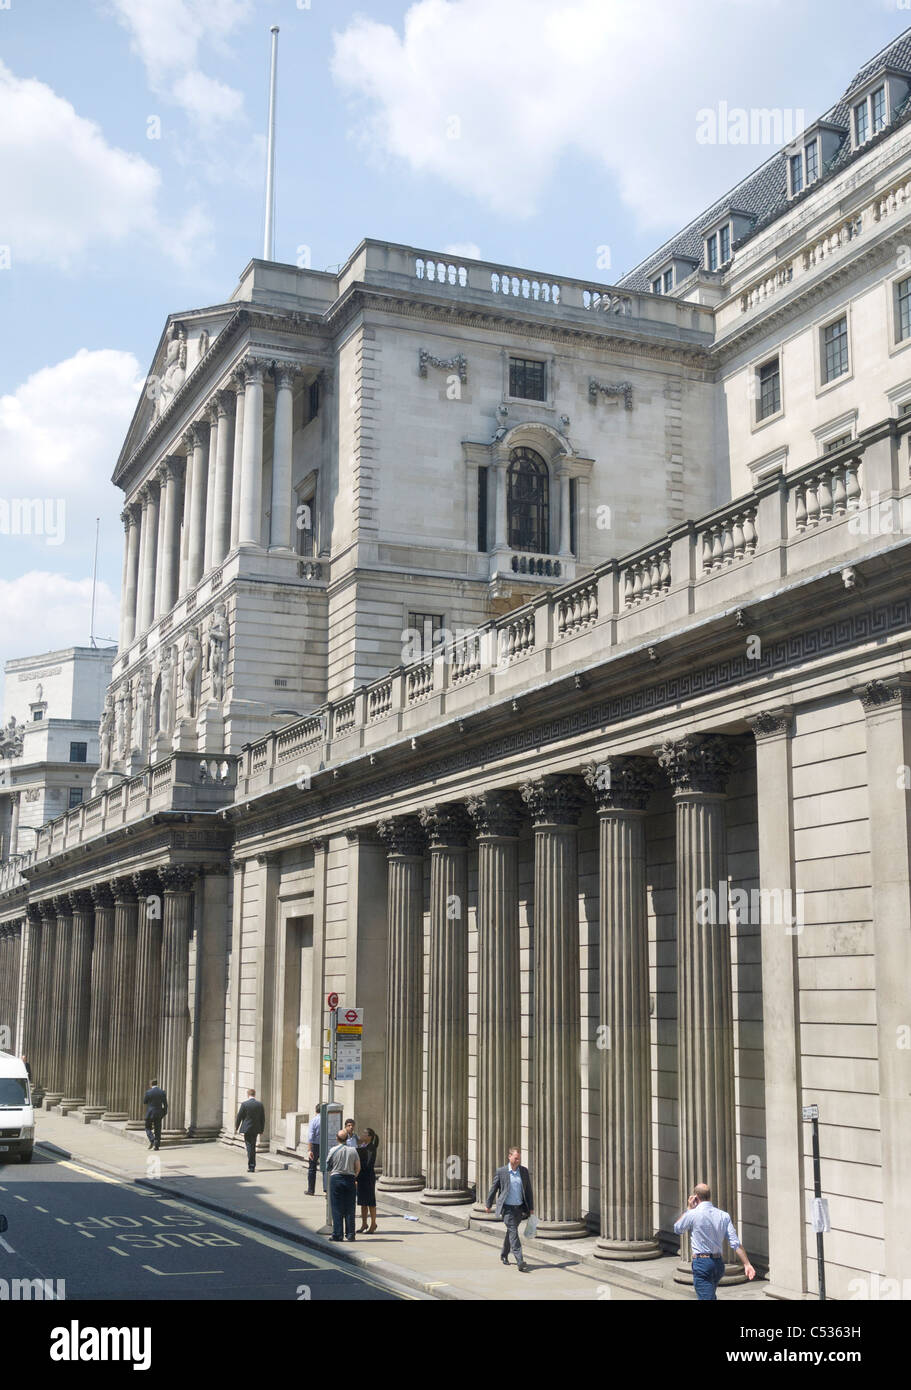 The Bank of England in Threadneedle Street, London England GB UK Stock Photo